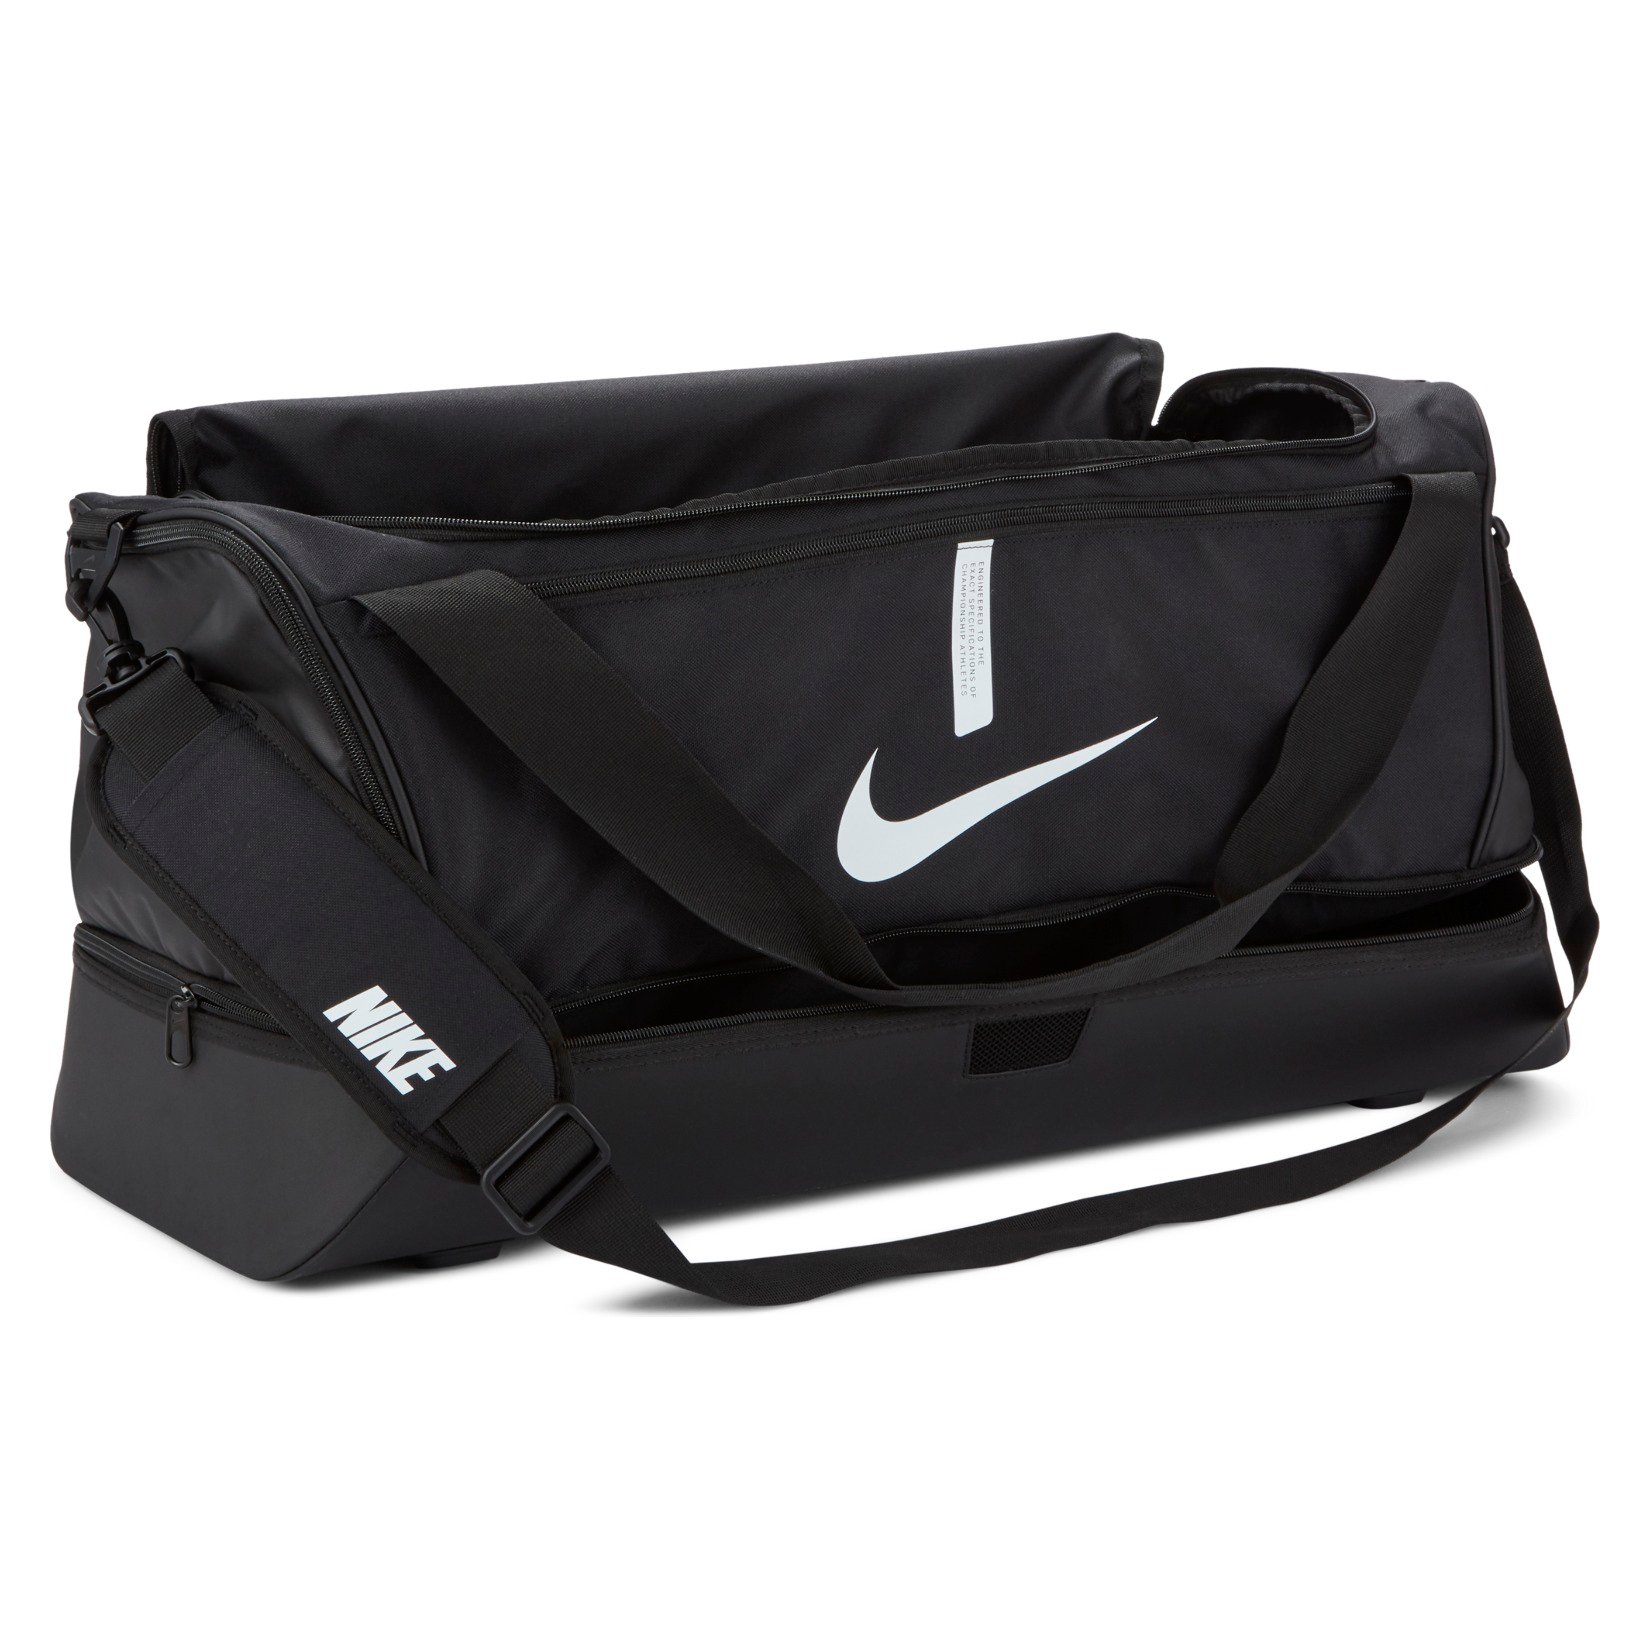 Sprong herfst Weiland Nike Academy Team Hardcase Duffel Bag (Large) - Kitlocker.com